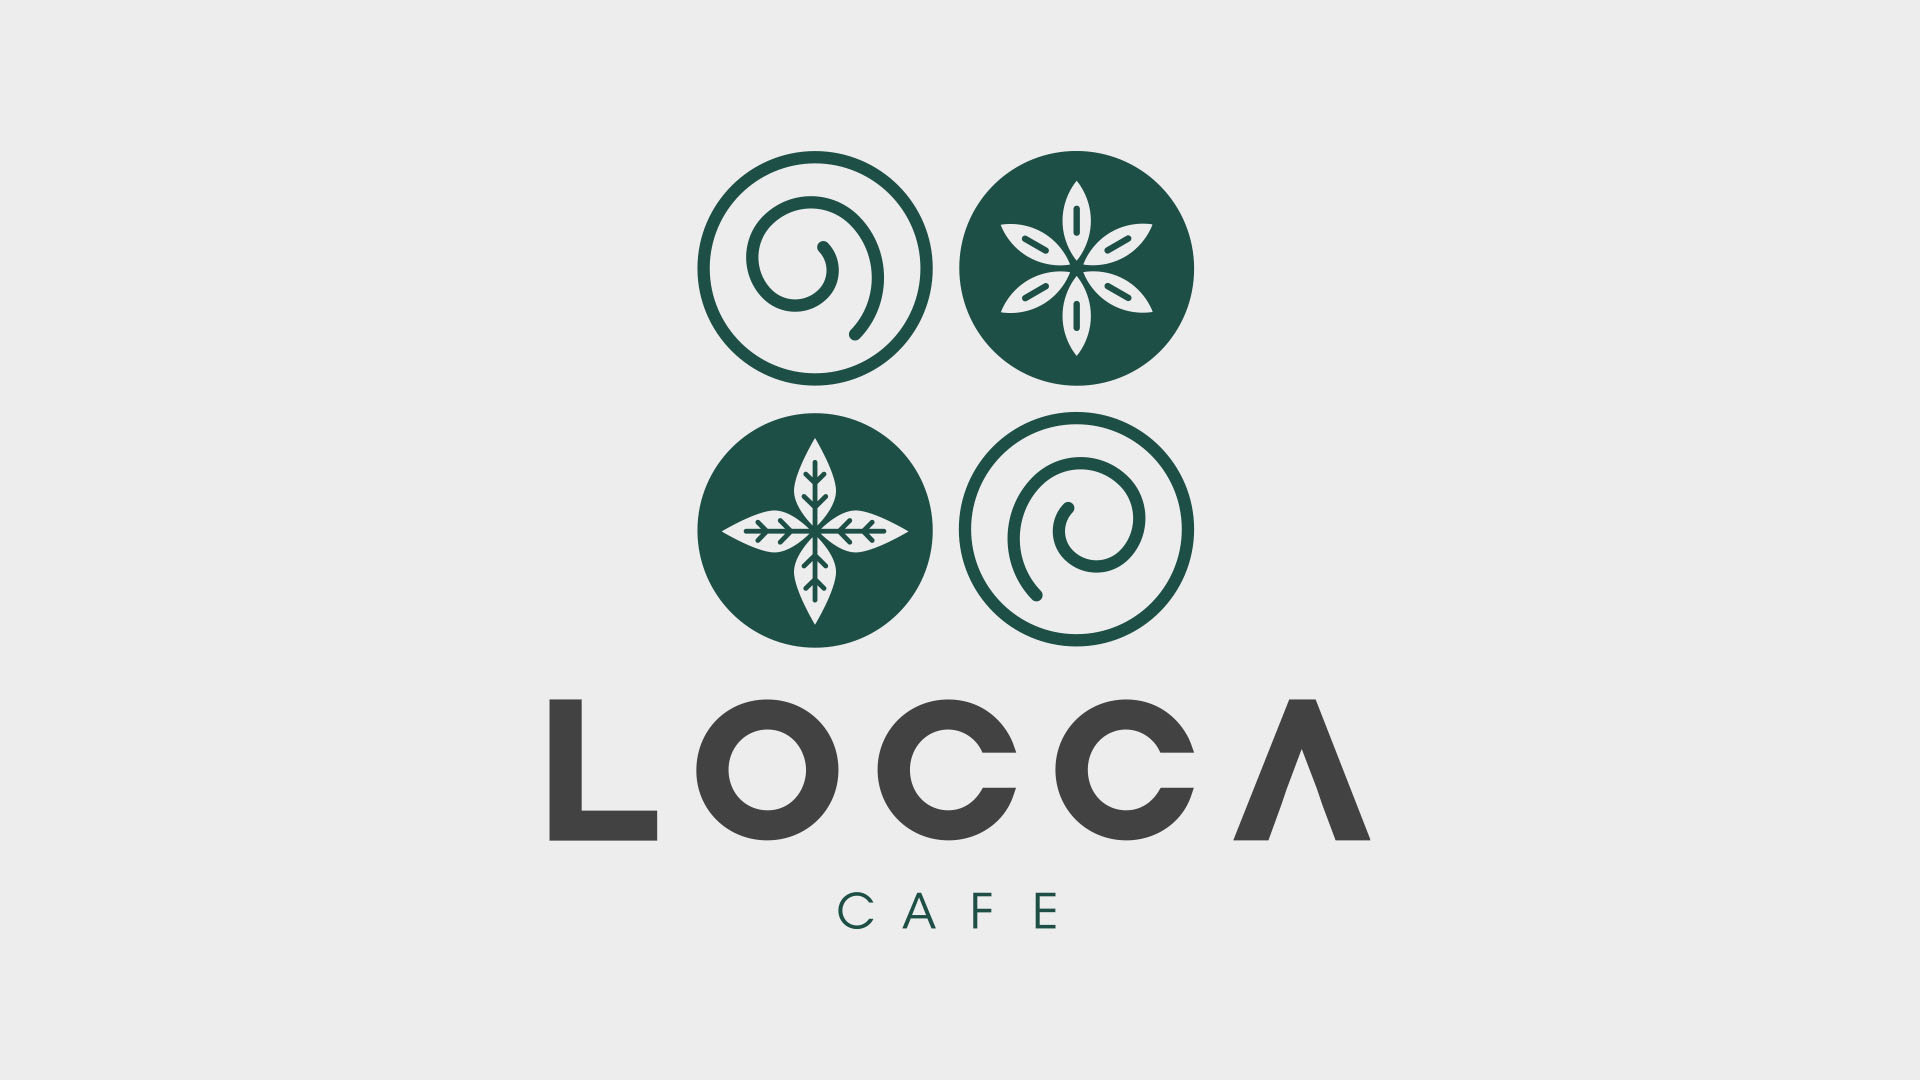 LOCCA Cafe